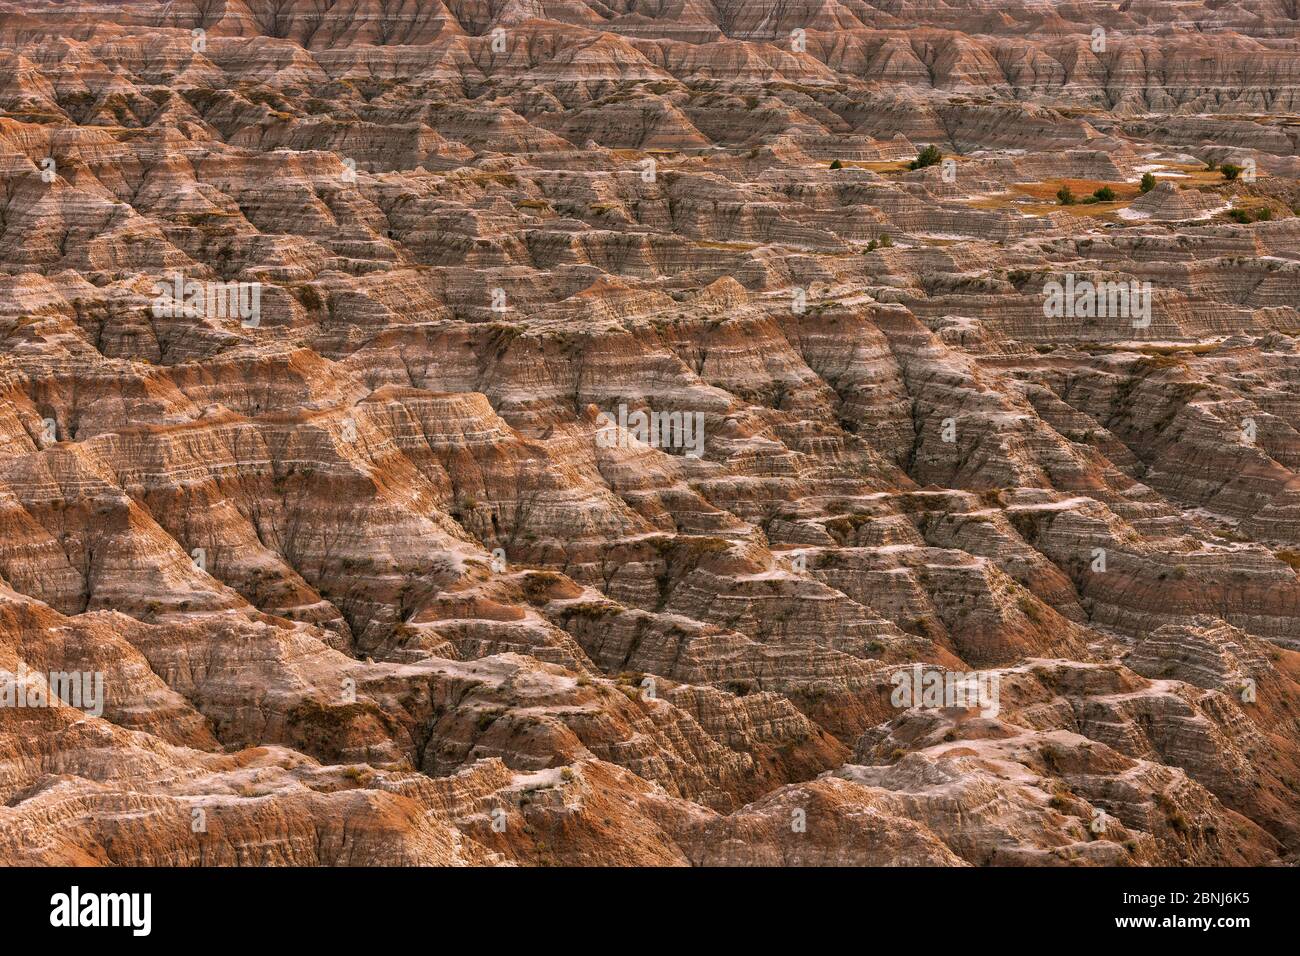 Eroded landscape, Sandstone striations and erosional features, Badlands National Park, South Dakota, USA September 2014. Stock Photo